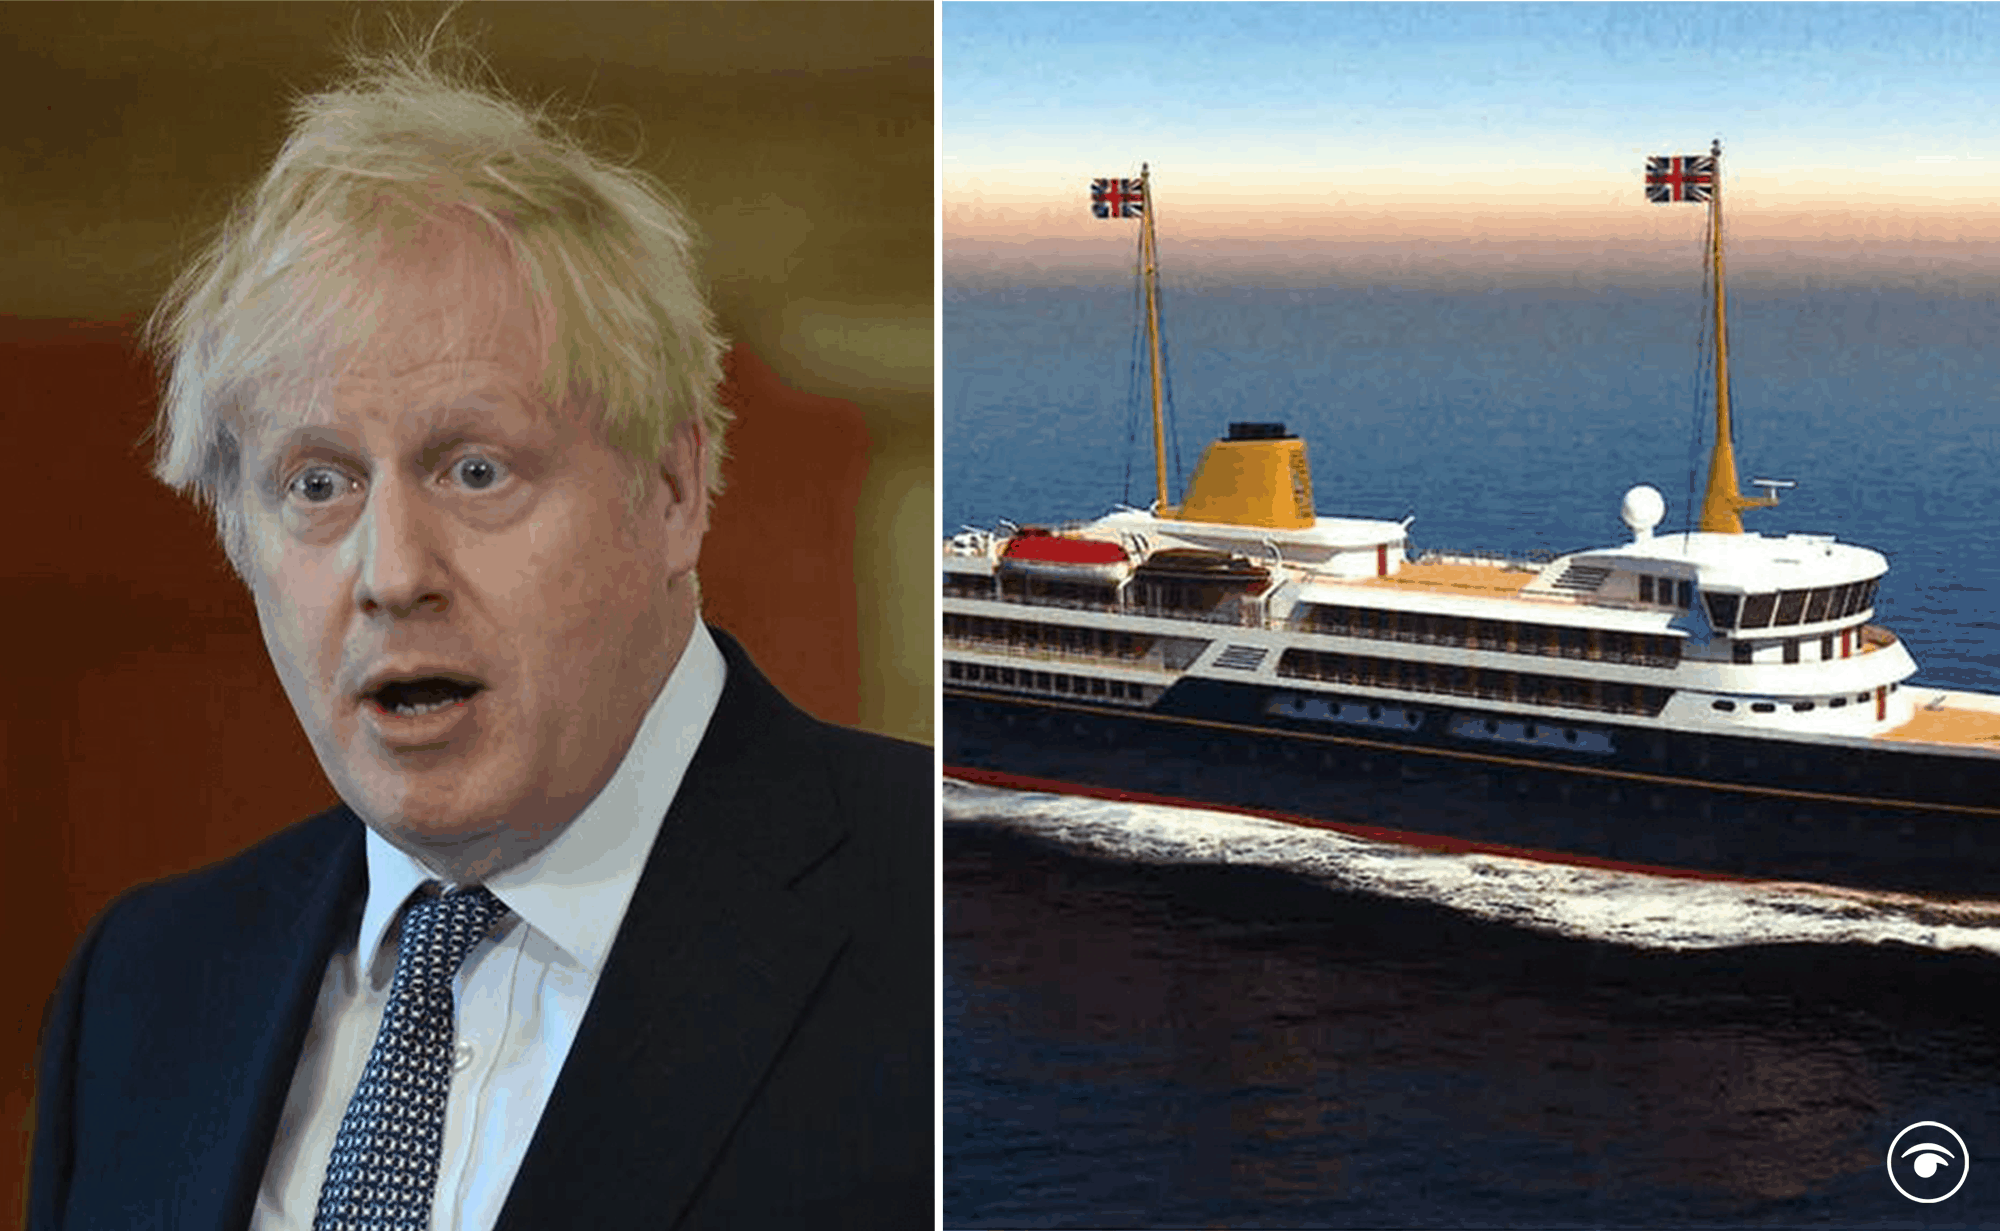 Ken Clarke condemns Boris Johnson over ‘silly populist’ ship